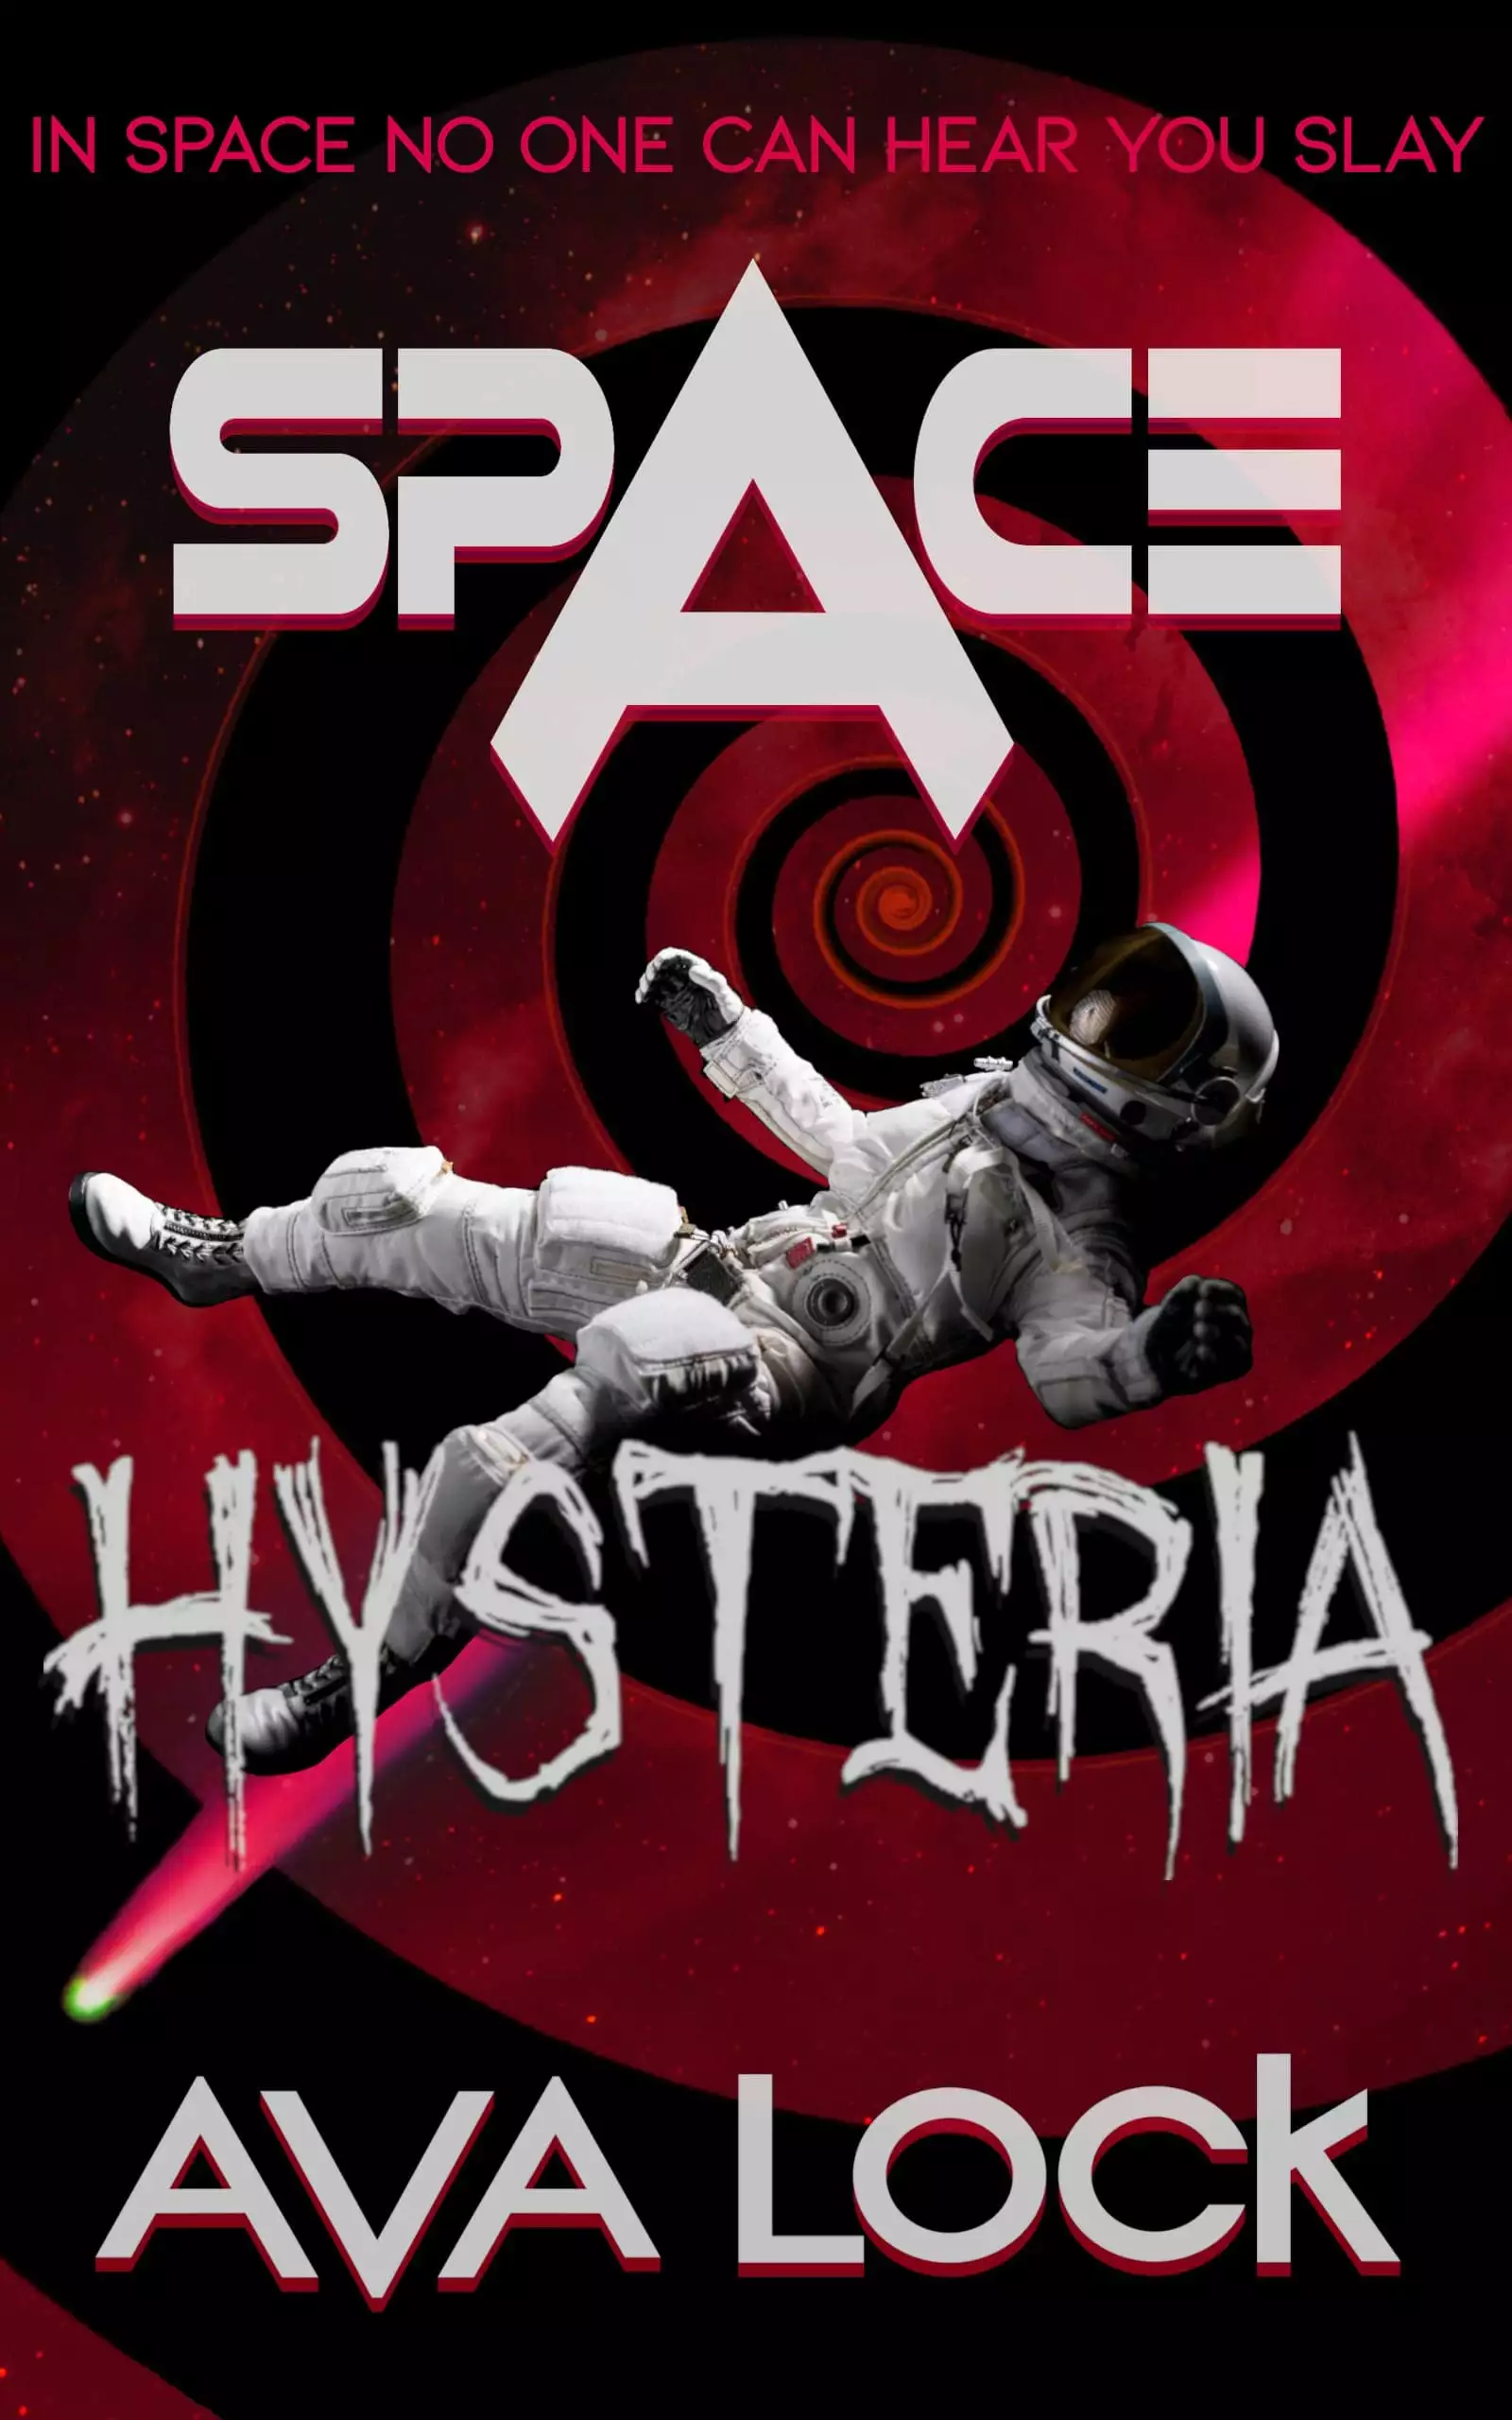 Space Hysteria